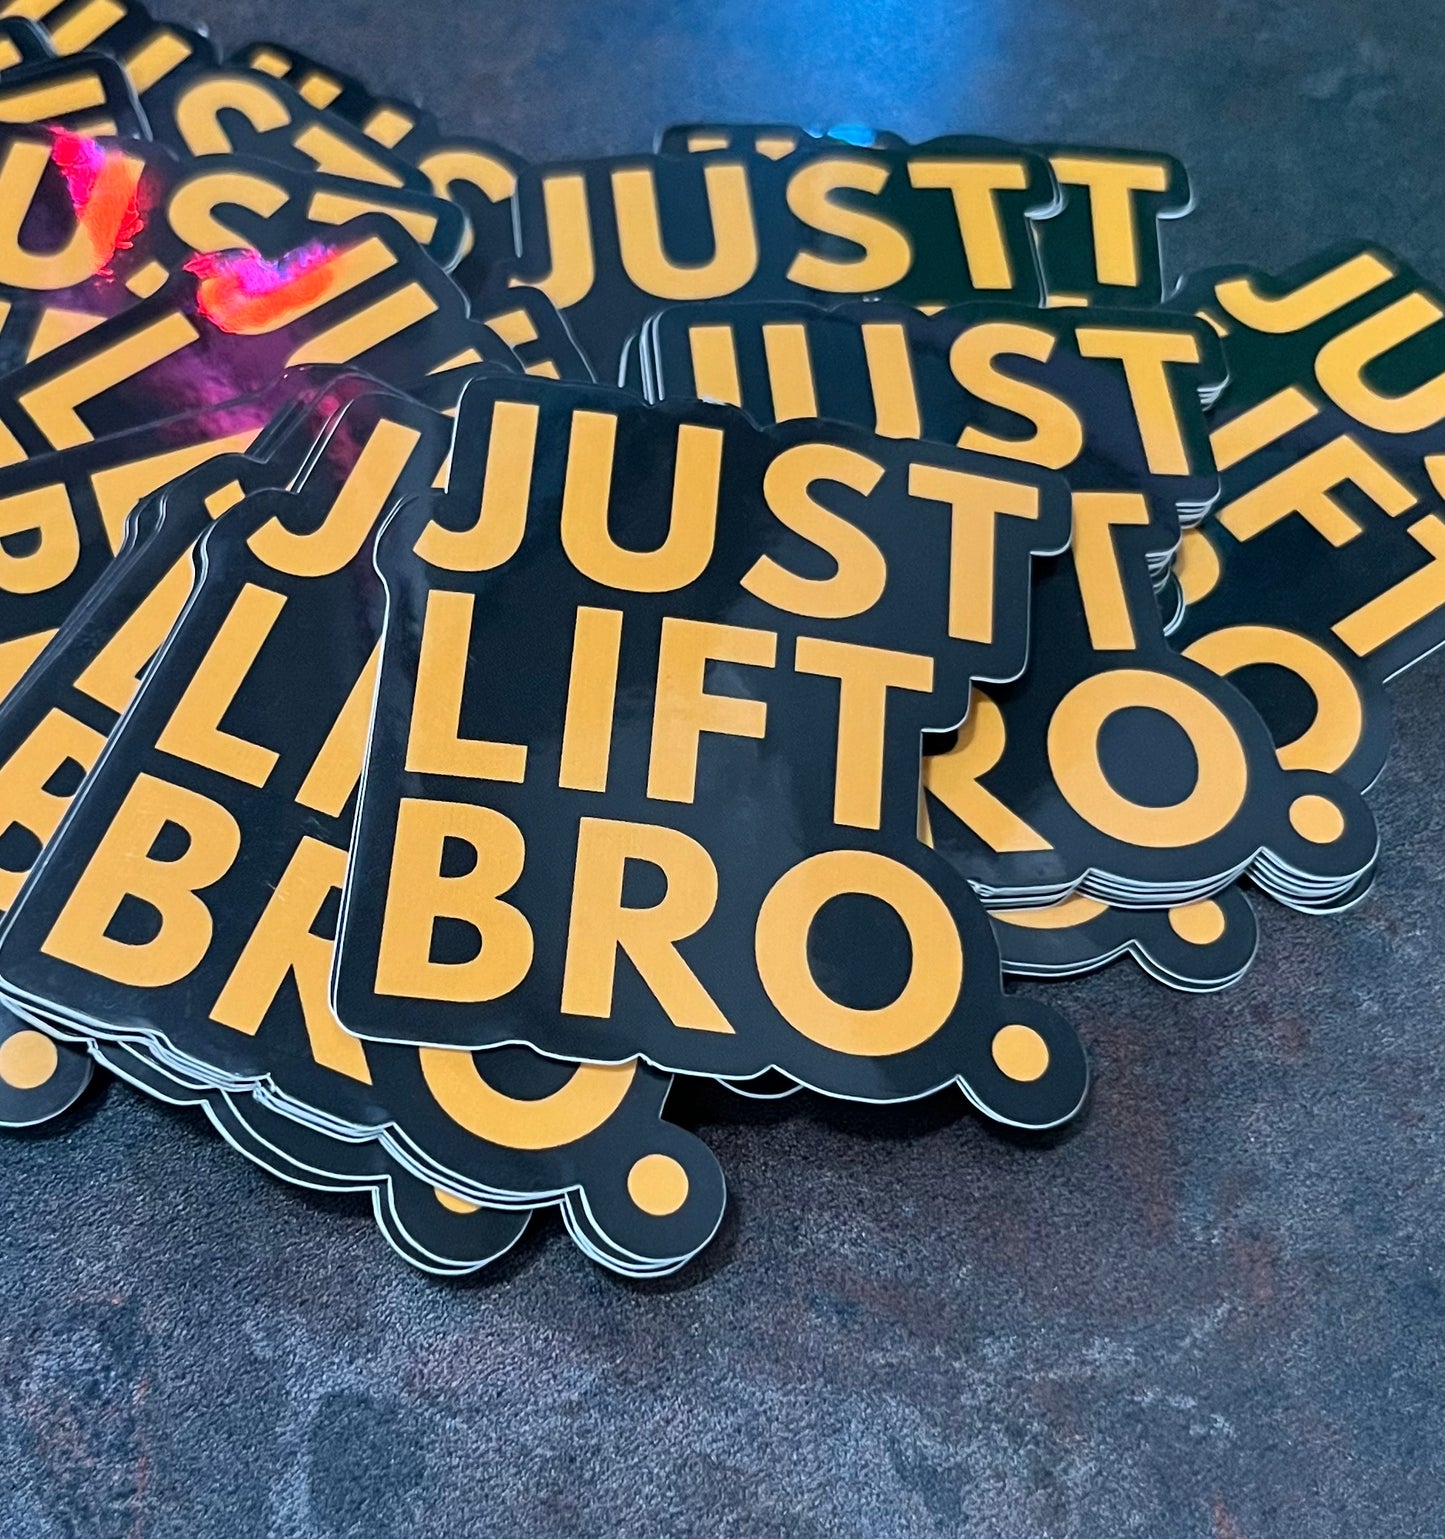 Just Lift Bro. Sticker